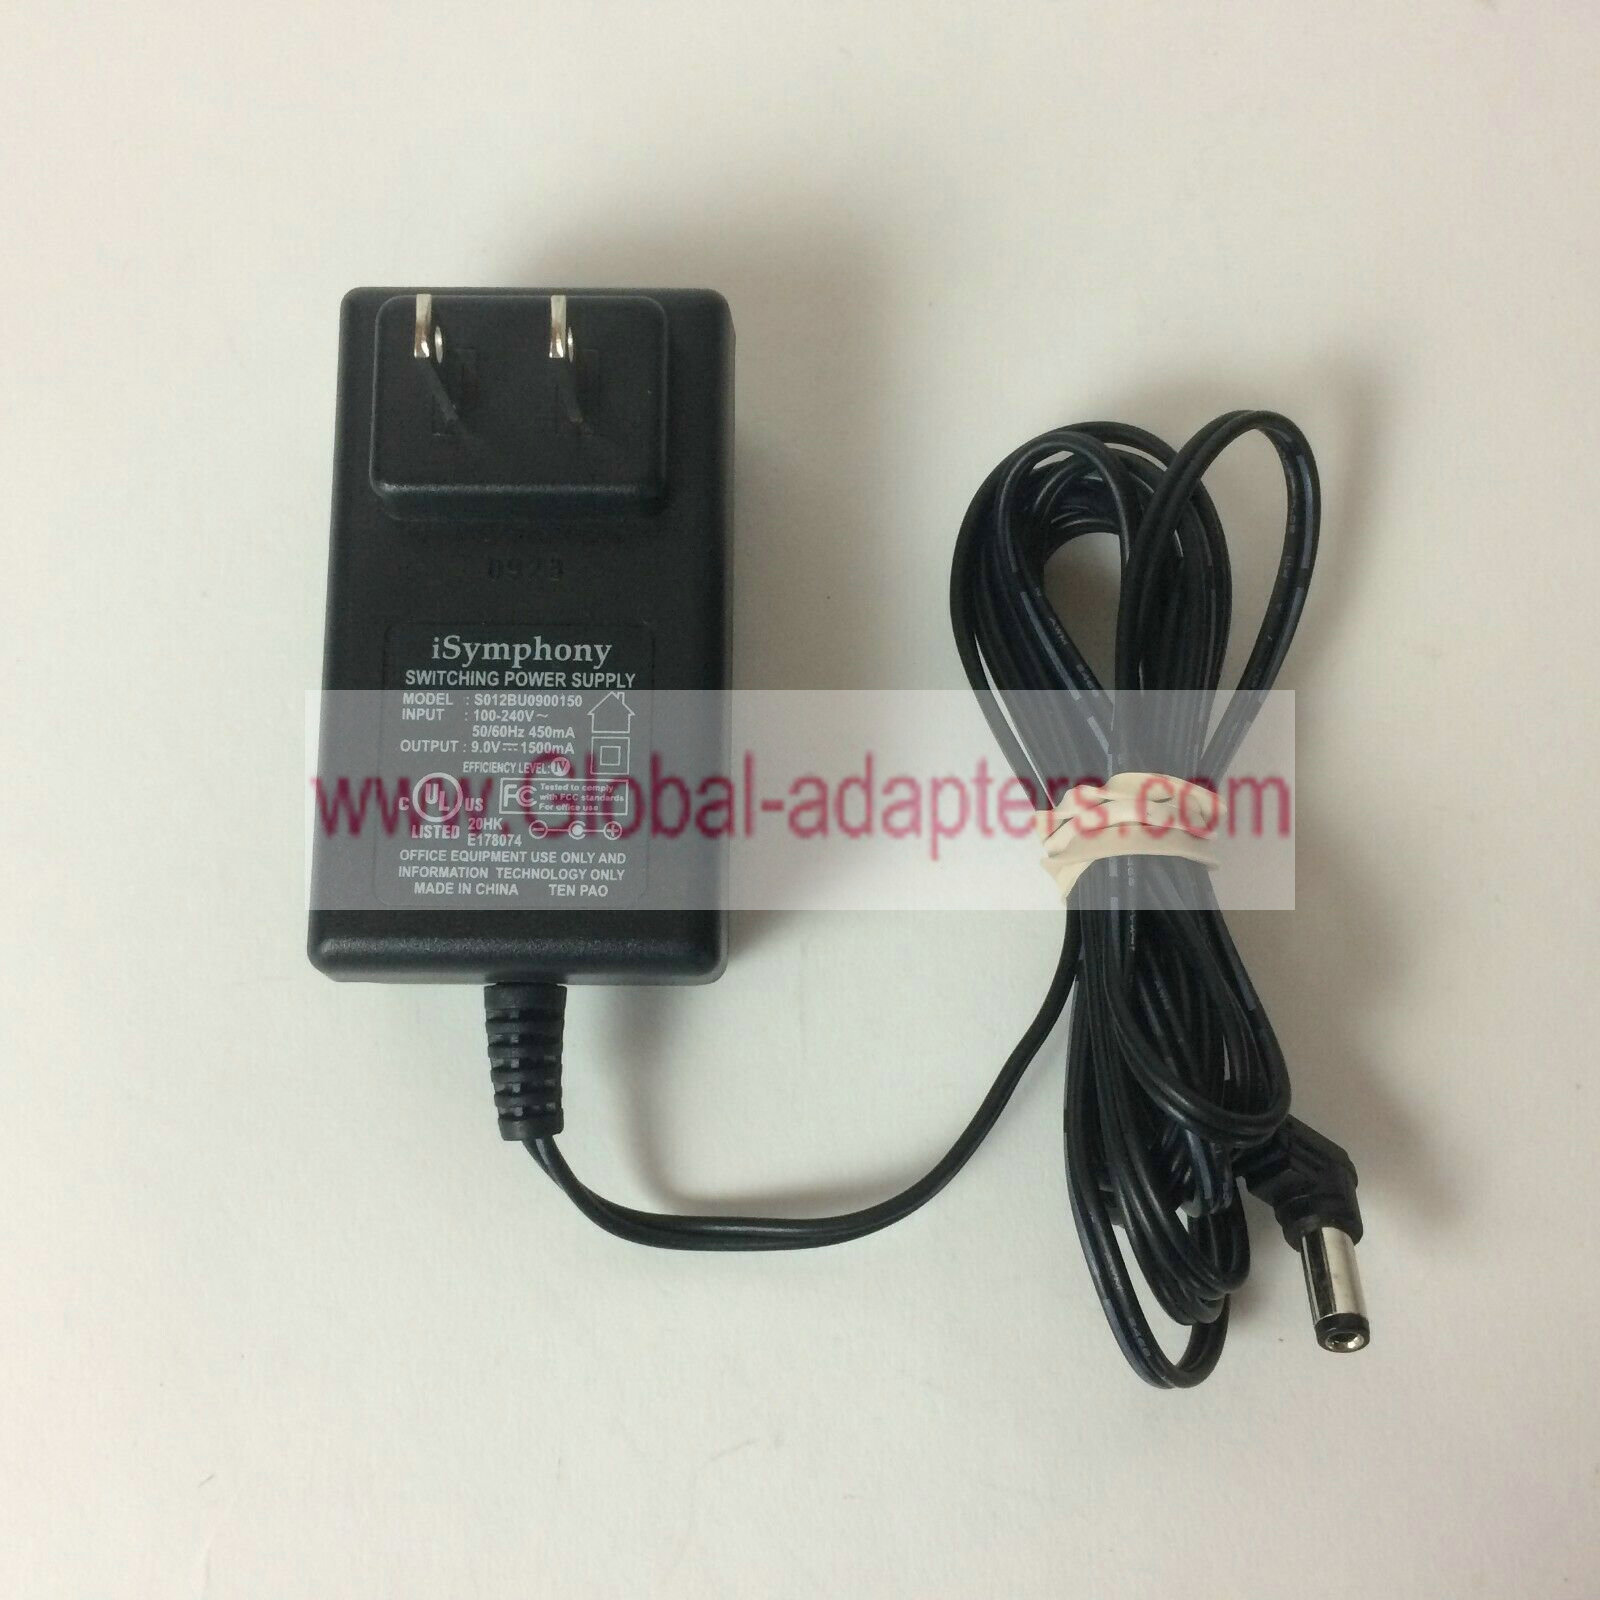 New iSymphony S012BU0900150 Switching Power Supply AC Adapter 9.0V 1500mA